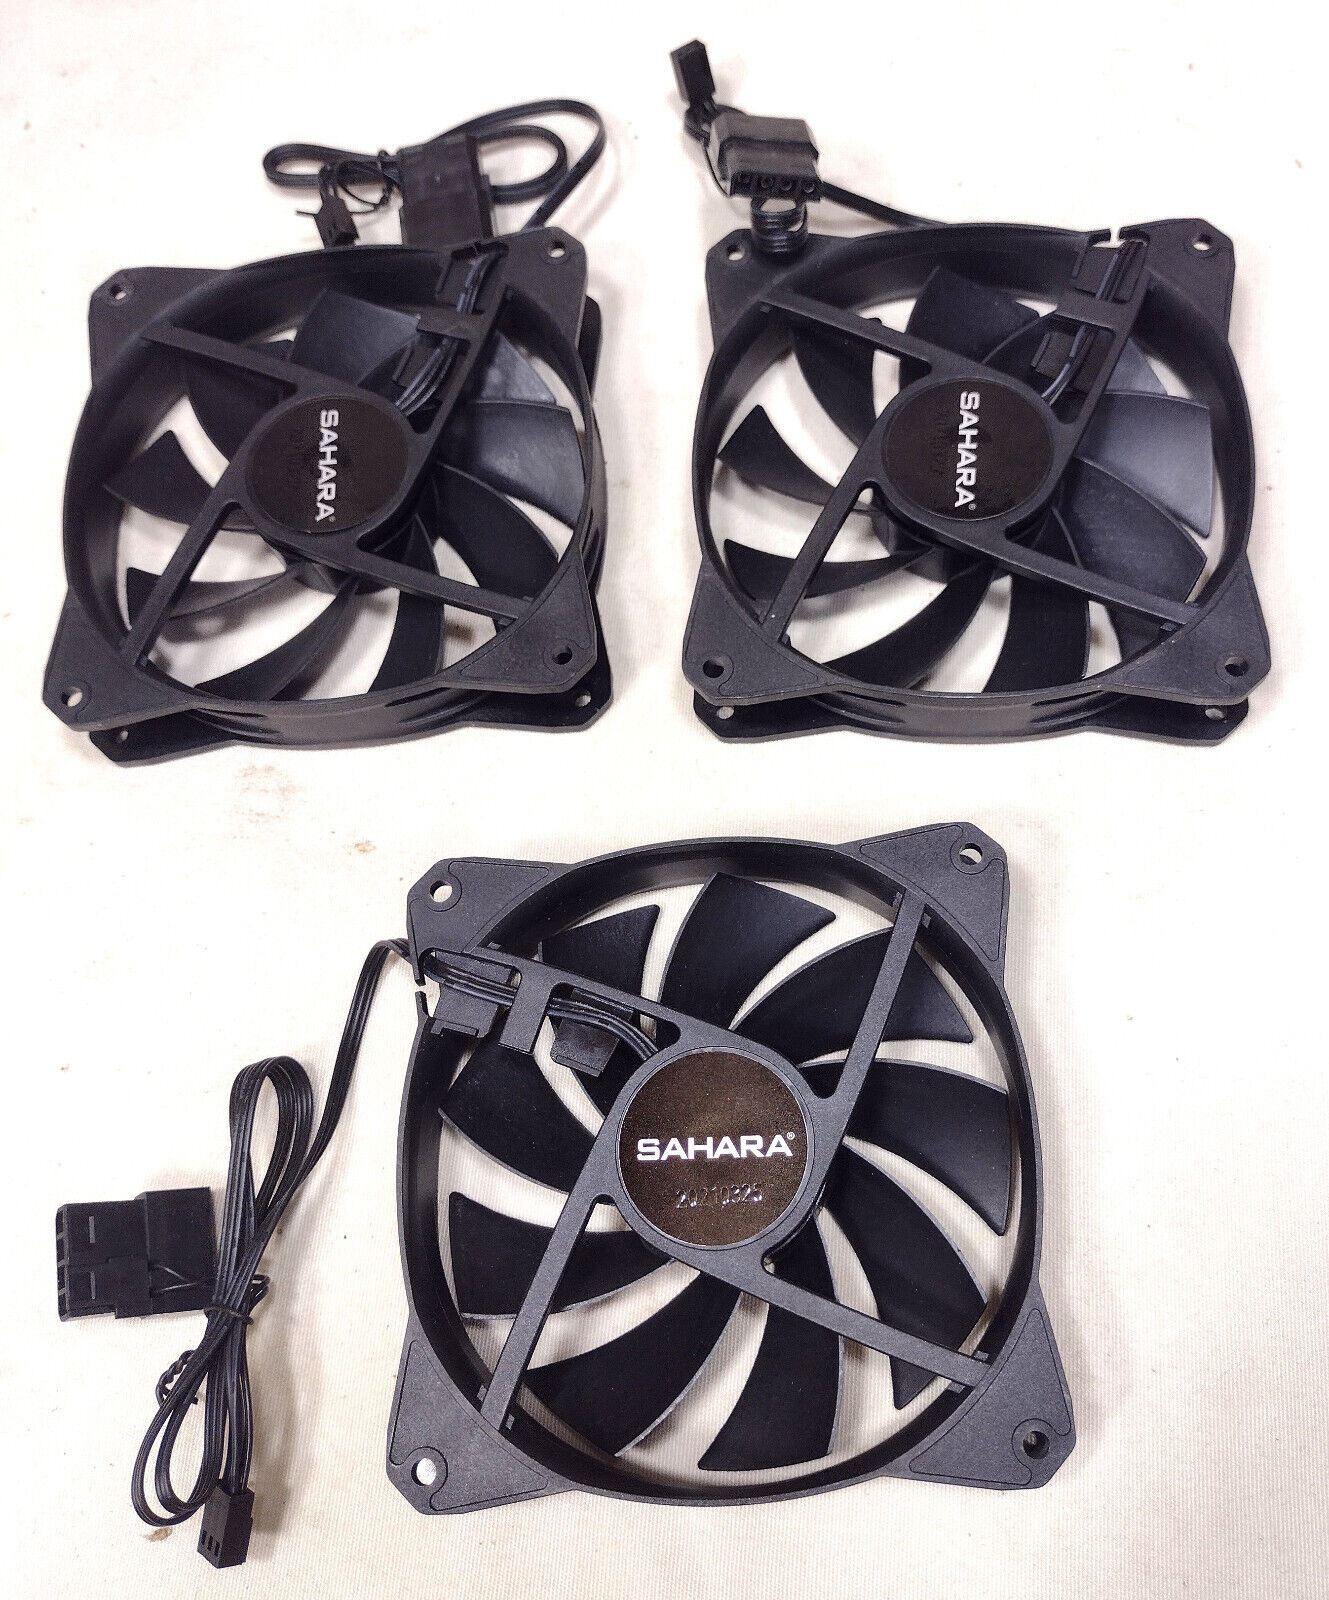 3 Sahara 120mm PC Cooling Fans & Deep Cool Hub New, open box